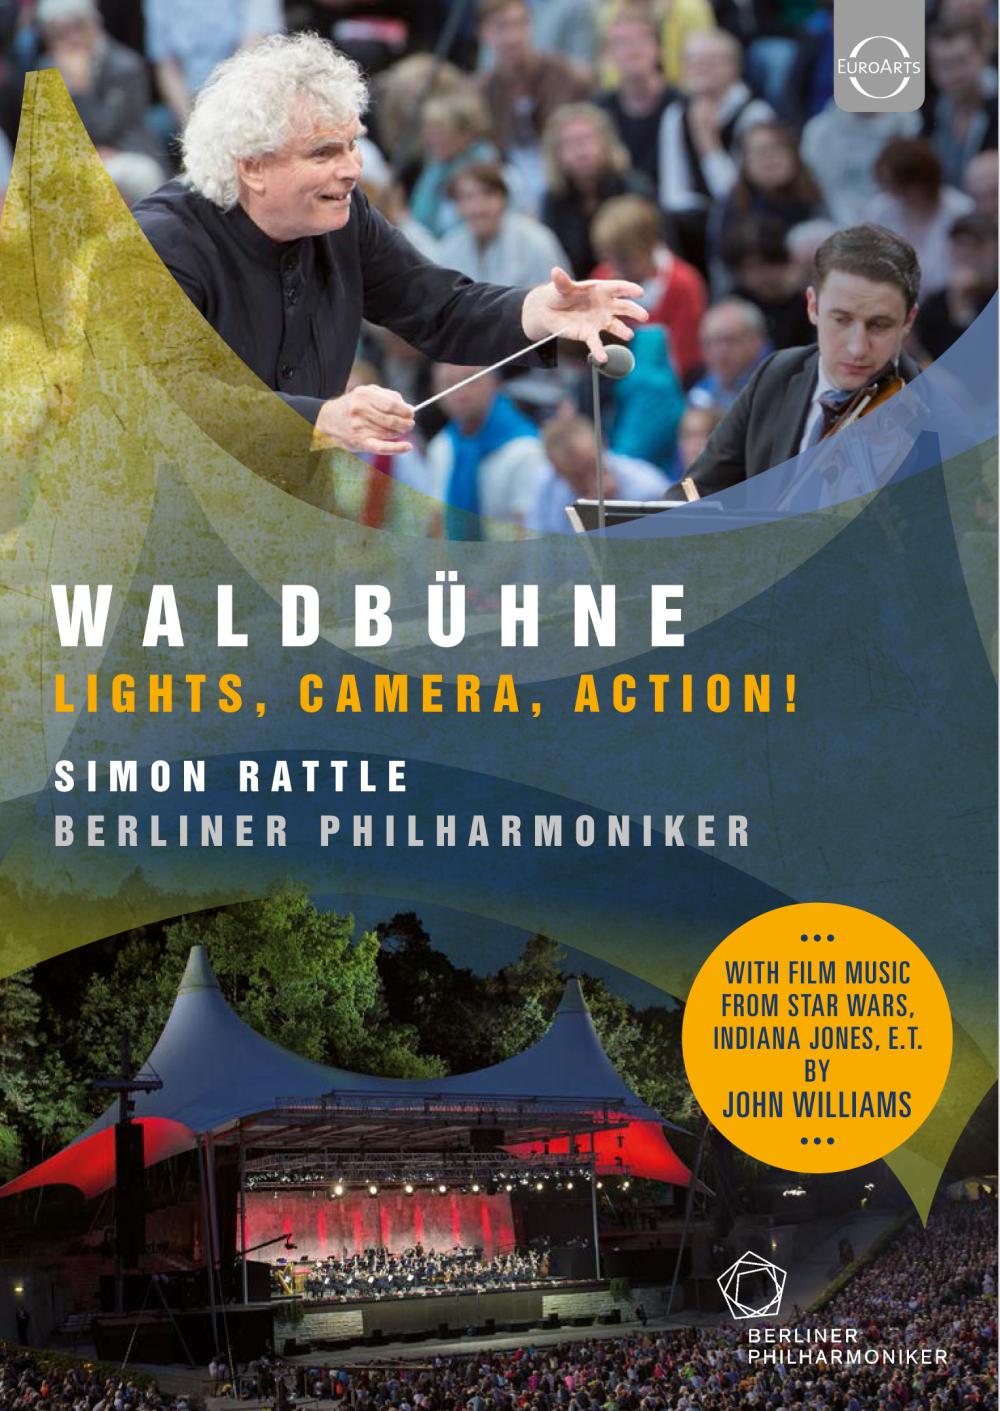 Waldbühne 2015 | Lights, Camera, Action! - EUROARTS